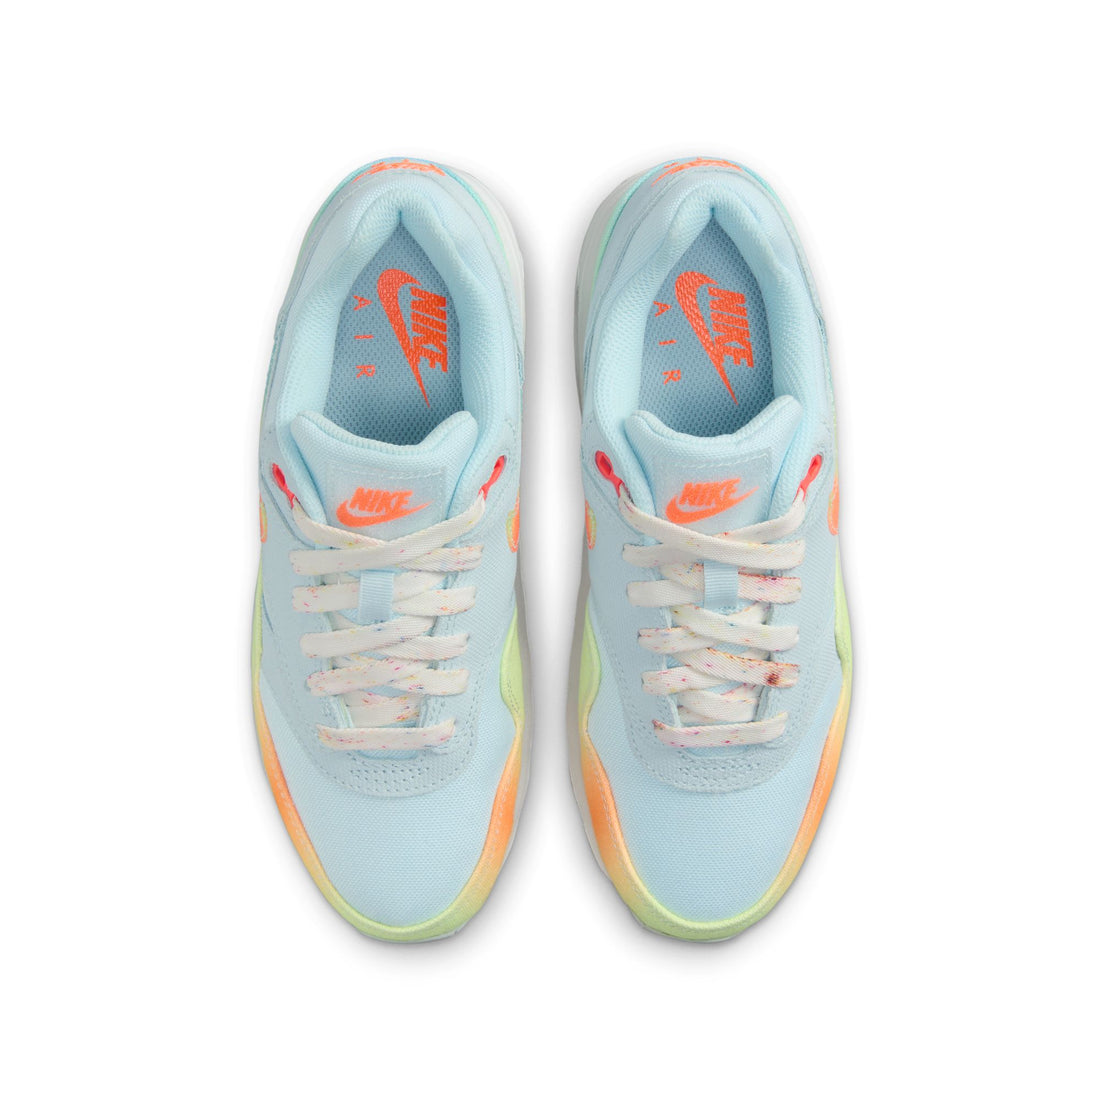 Nike Air Max 1 BG (Glacier Blue/Total Orange)